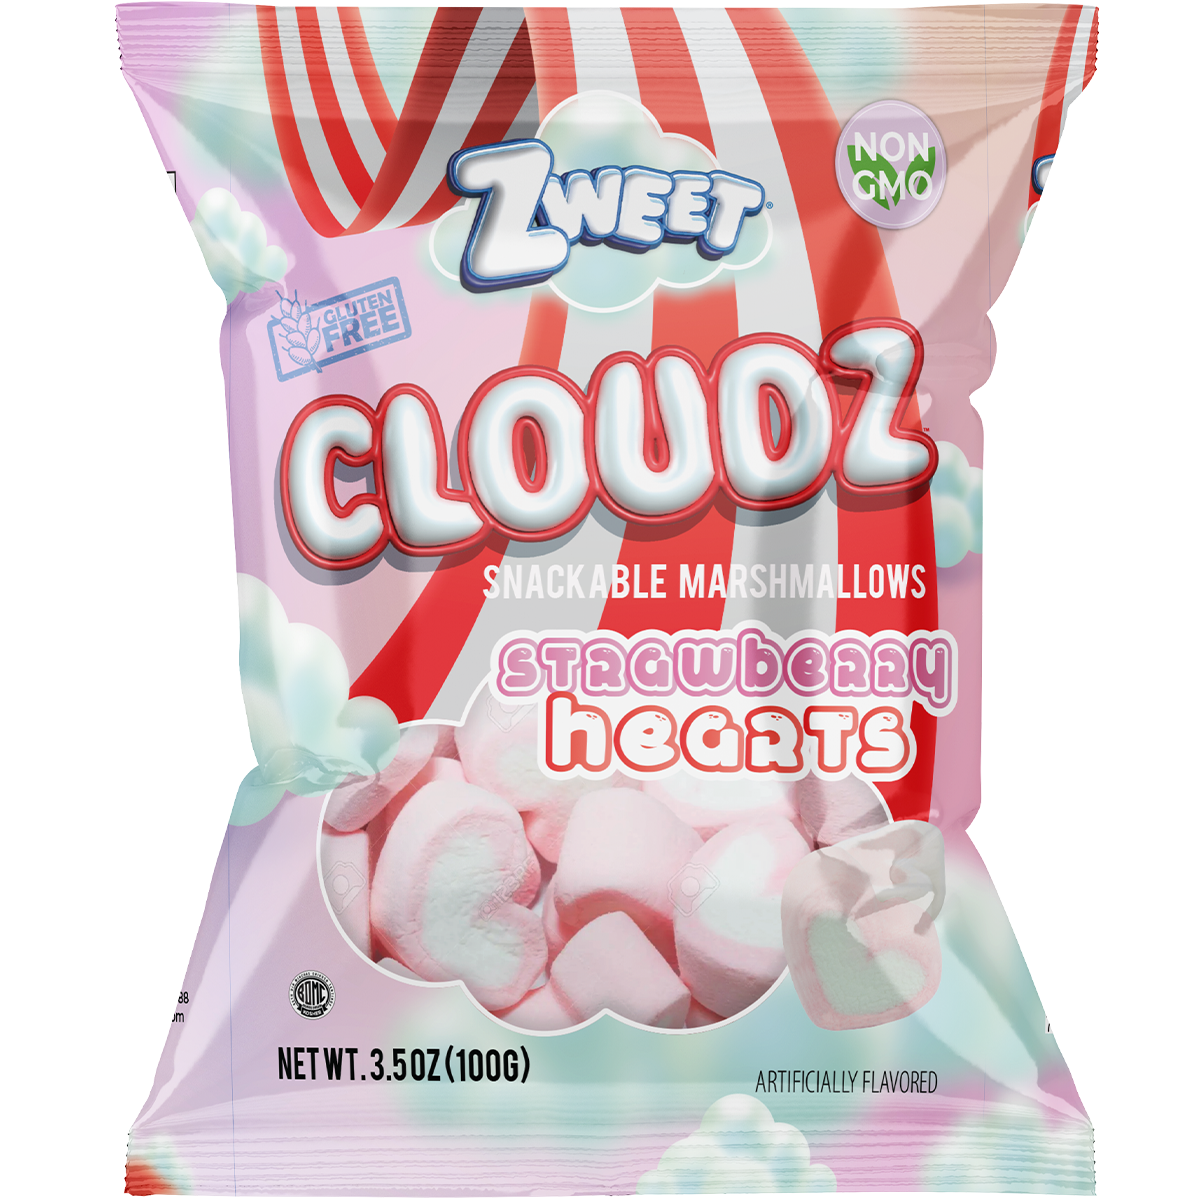 Cloudz Snackable Marshmallows Strawberry Hearts | 3.5 oz | Zweet